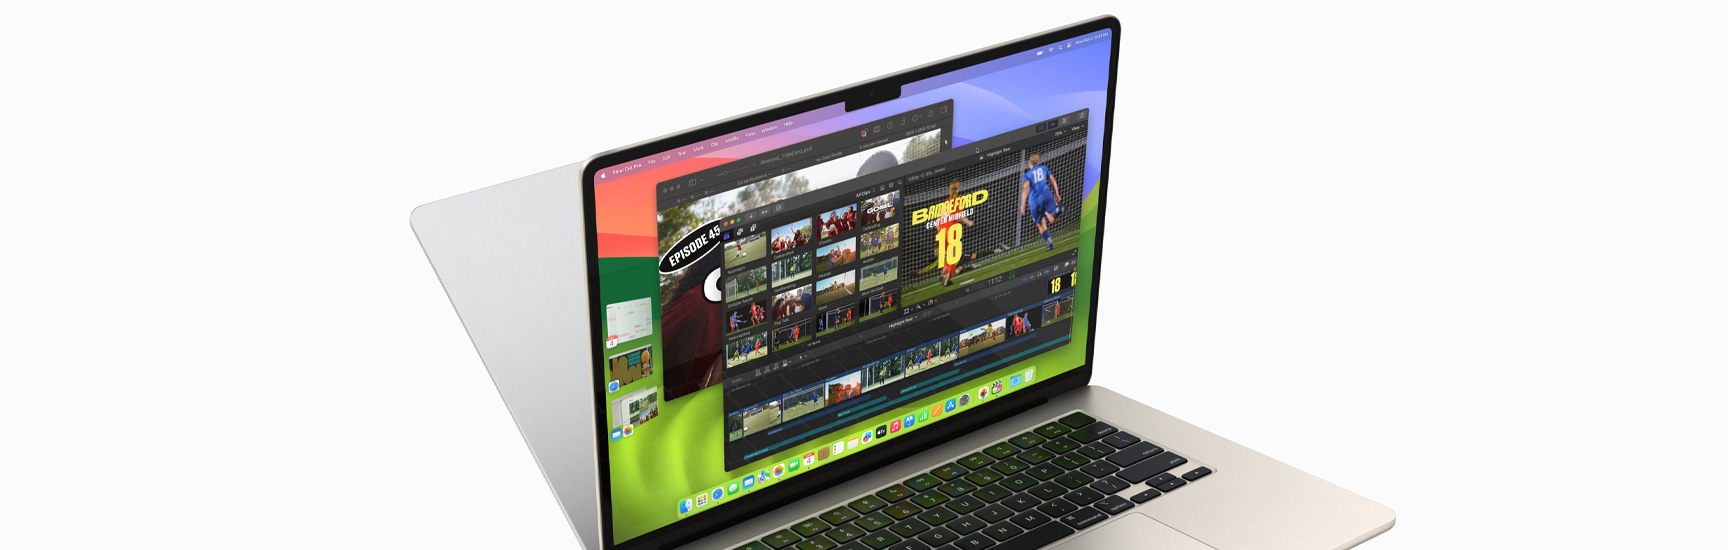 MacBook Air ที่กางเปิดอยู่แสดง Final Cut Pro และ FCP และ Pixelmator Pro โดยมีแอปปฏิทิน, Safari, เมล และรูปภาพเปิดอยู่ทางด้านซ้ายของหน้าจอ ด้านหลังของ MacBook Pro เครื่องที่สองปรากฏอยู่ด้านหลังเครื่องแรกจนดูเหมือนเป็นภาพสะท้อนจากกระจกเงา